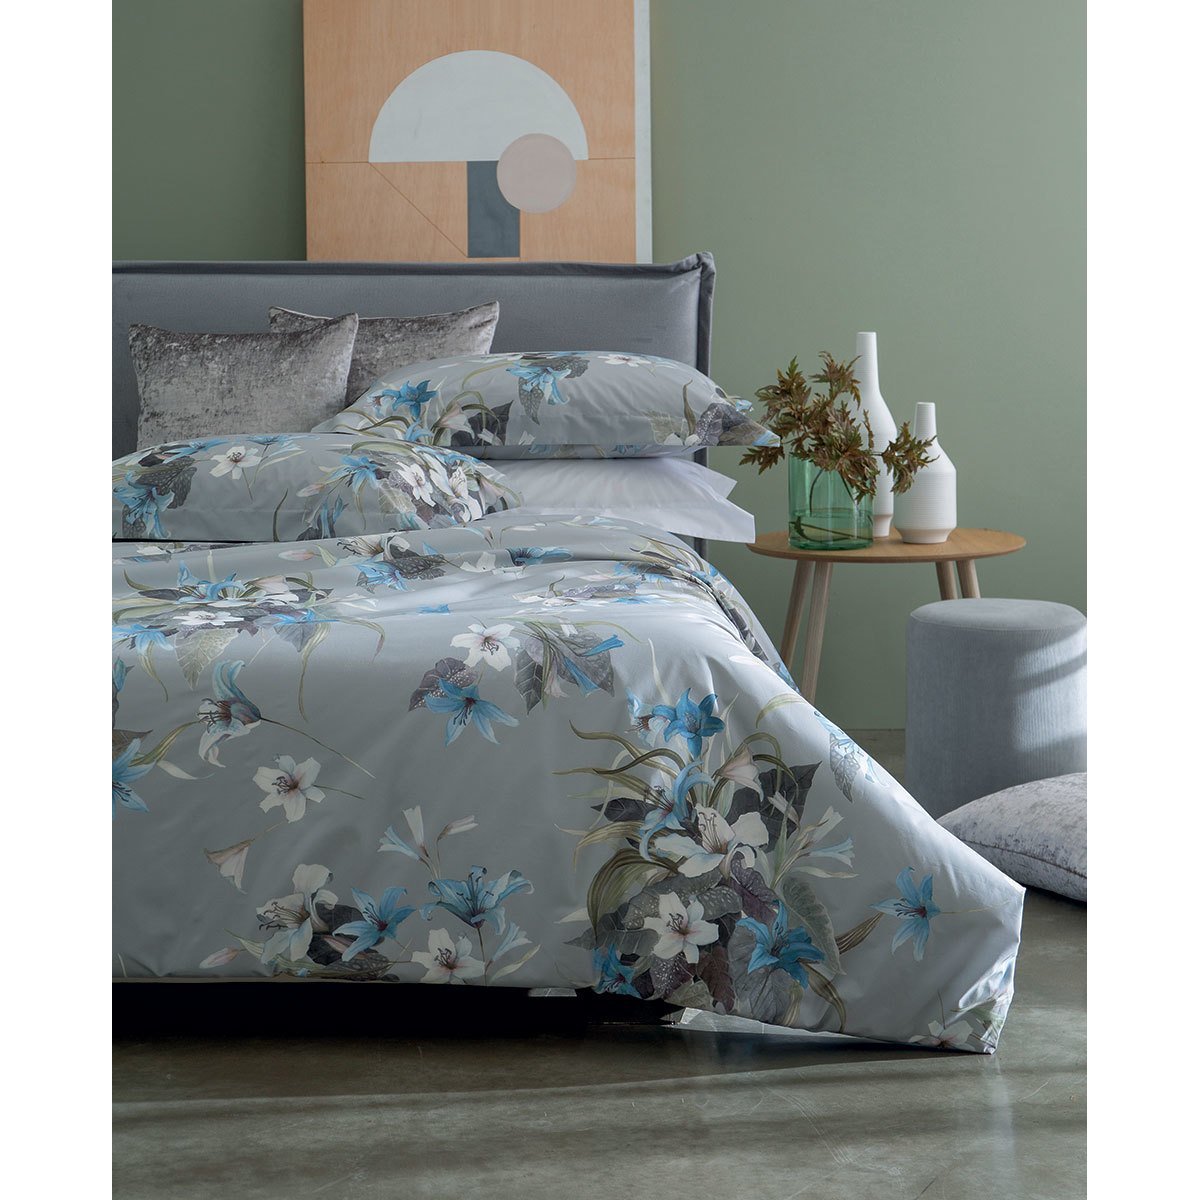 Double bedding set with duvet cover Lilium